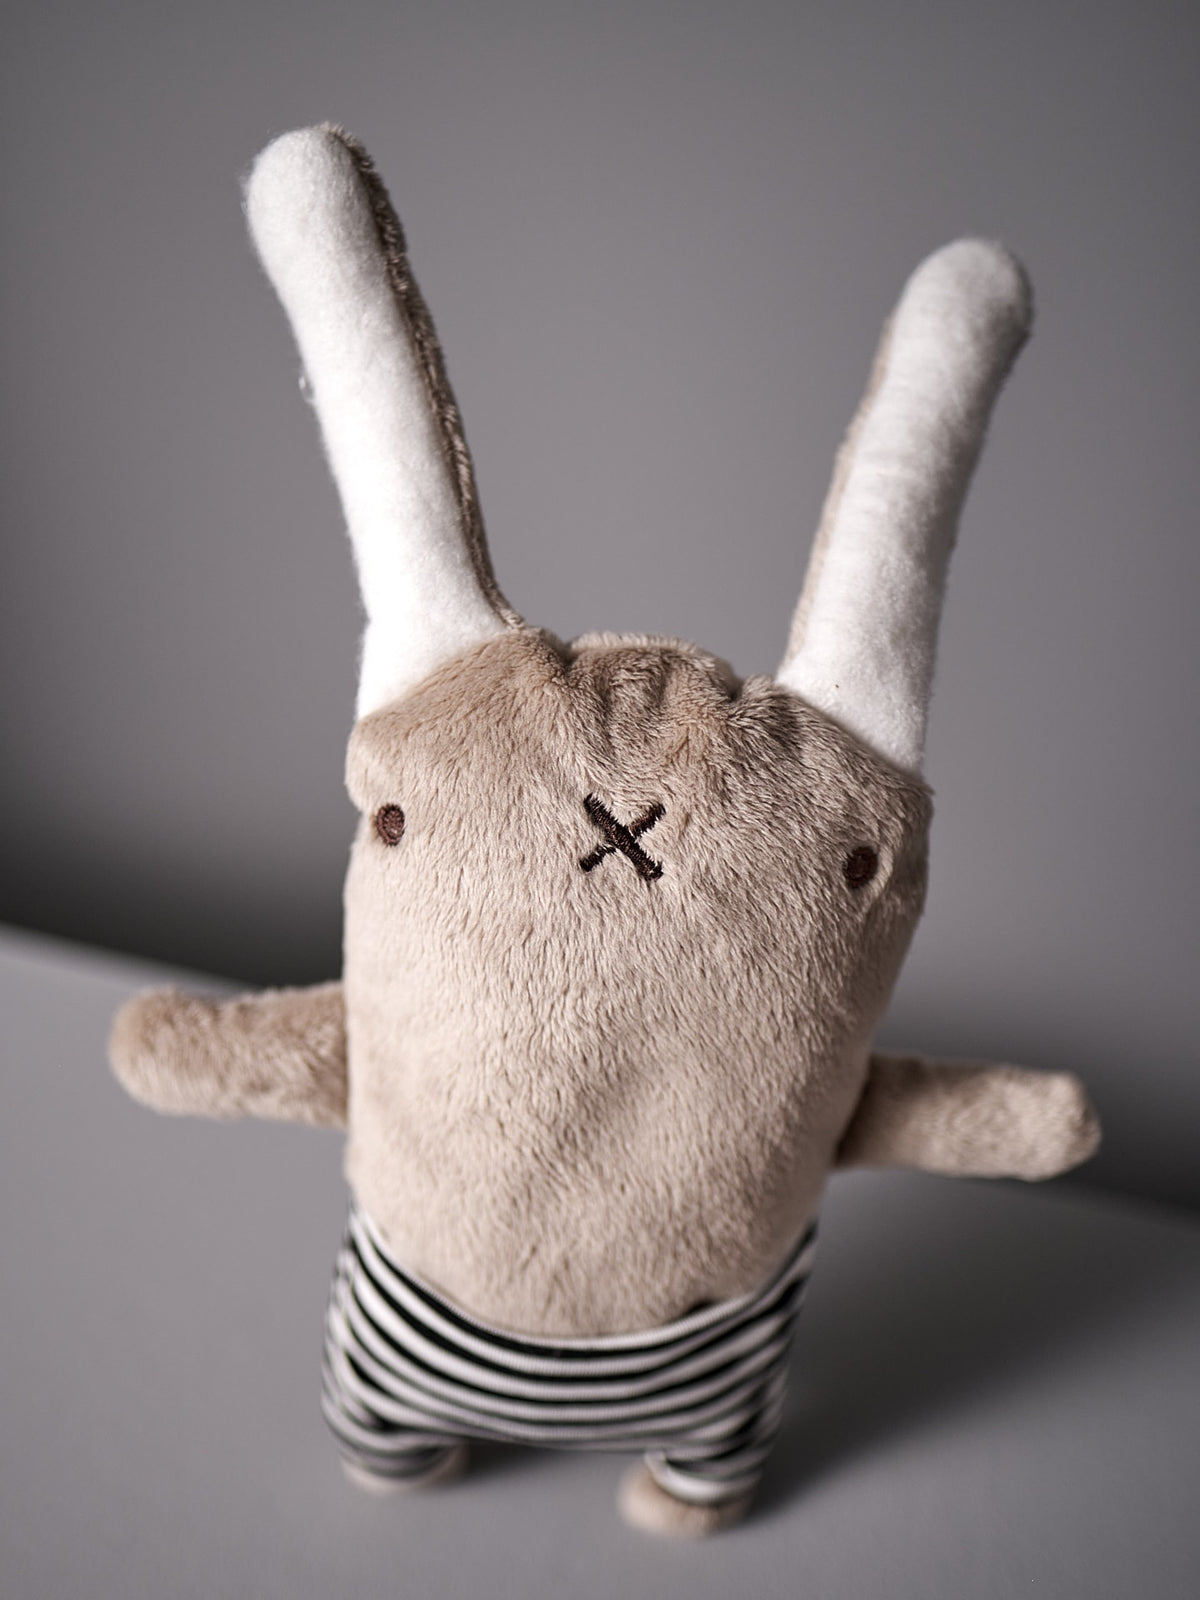 A Louise la Lapine stuffed bunny wearing striped pants from Raplapla.